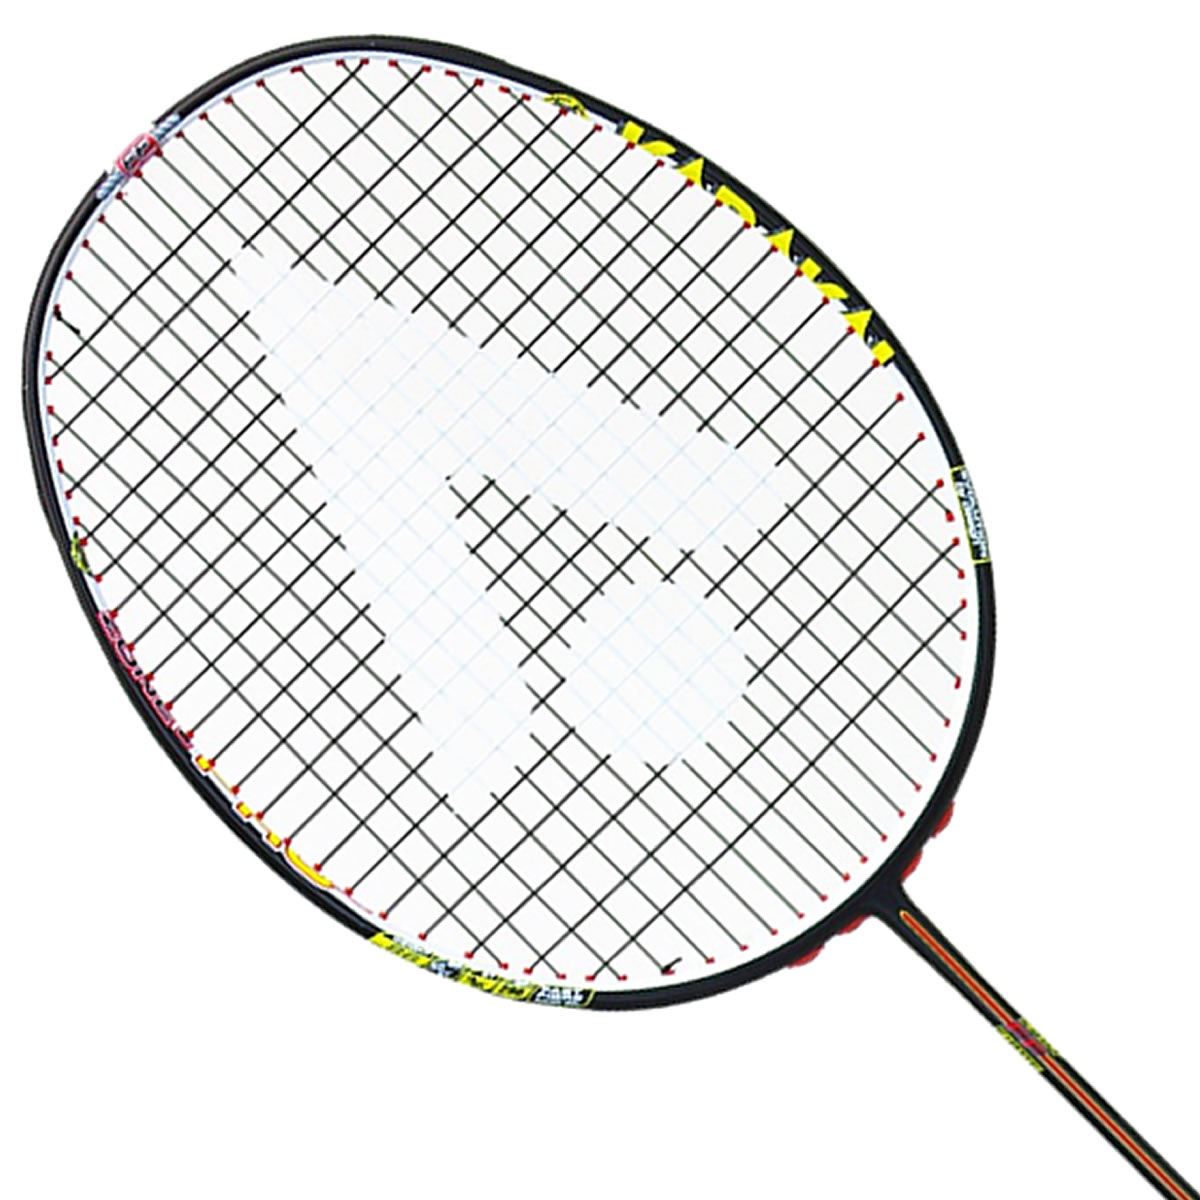 Karakal Black Zone Pro Fast Fibre (FF) Graphite Badminton Racket - Black